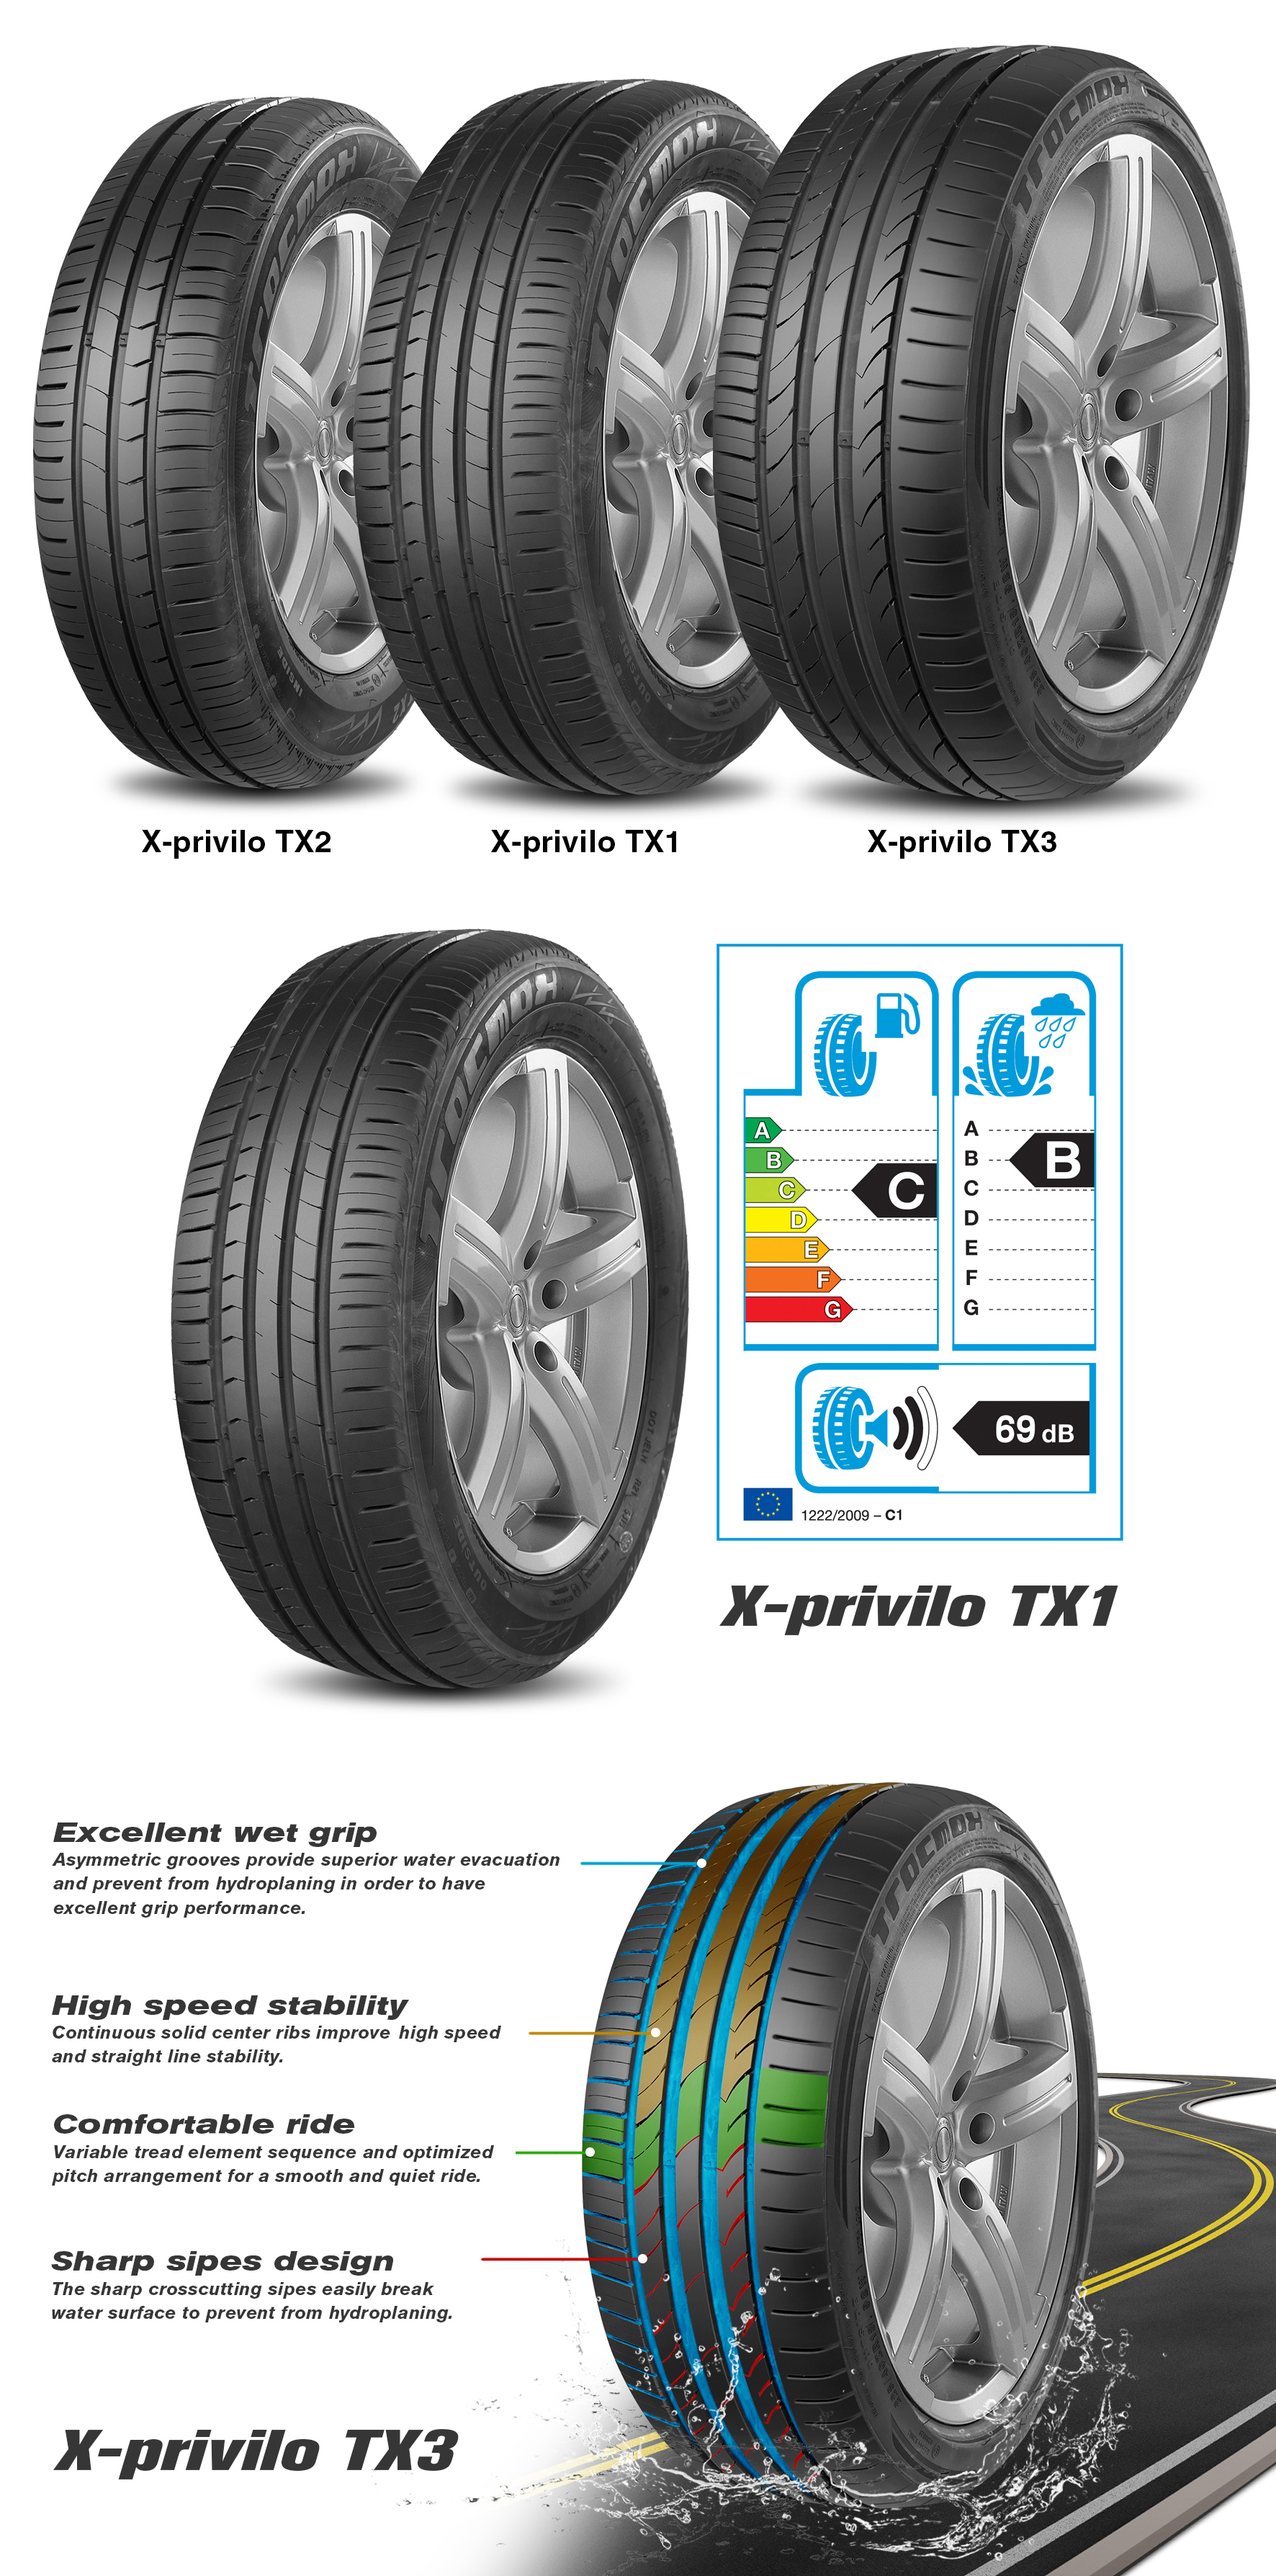 Tracmax launches new X-privilo Tyrepress - series